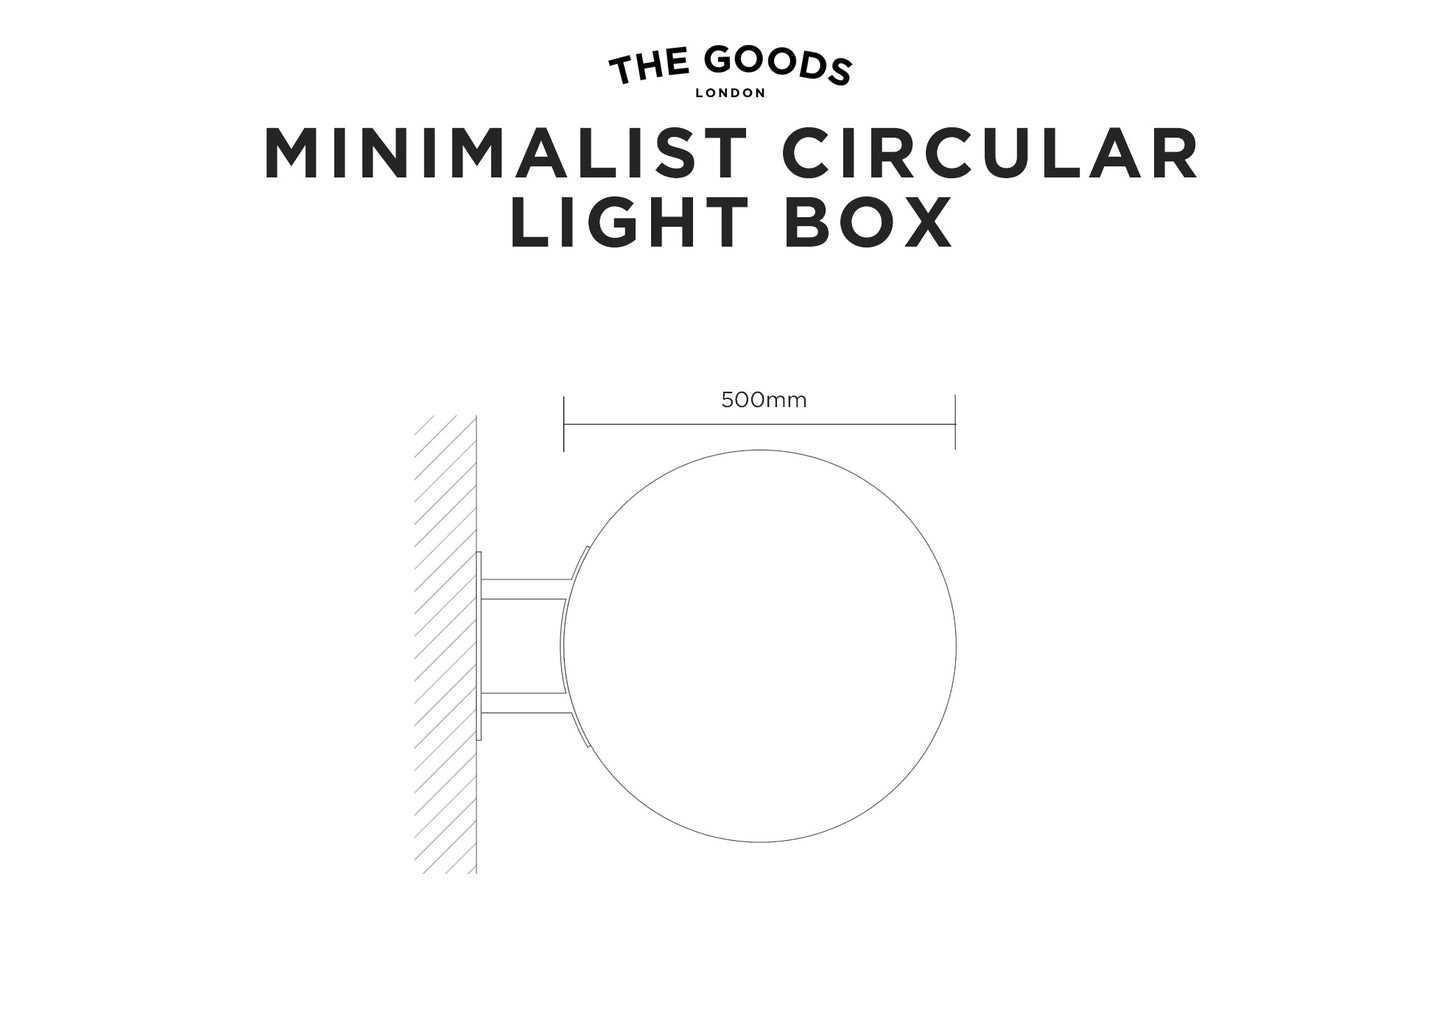  Circular Light Box Sign Technical Drawing